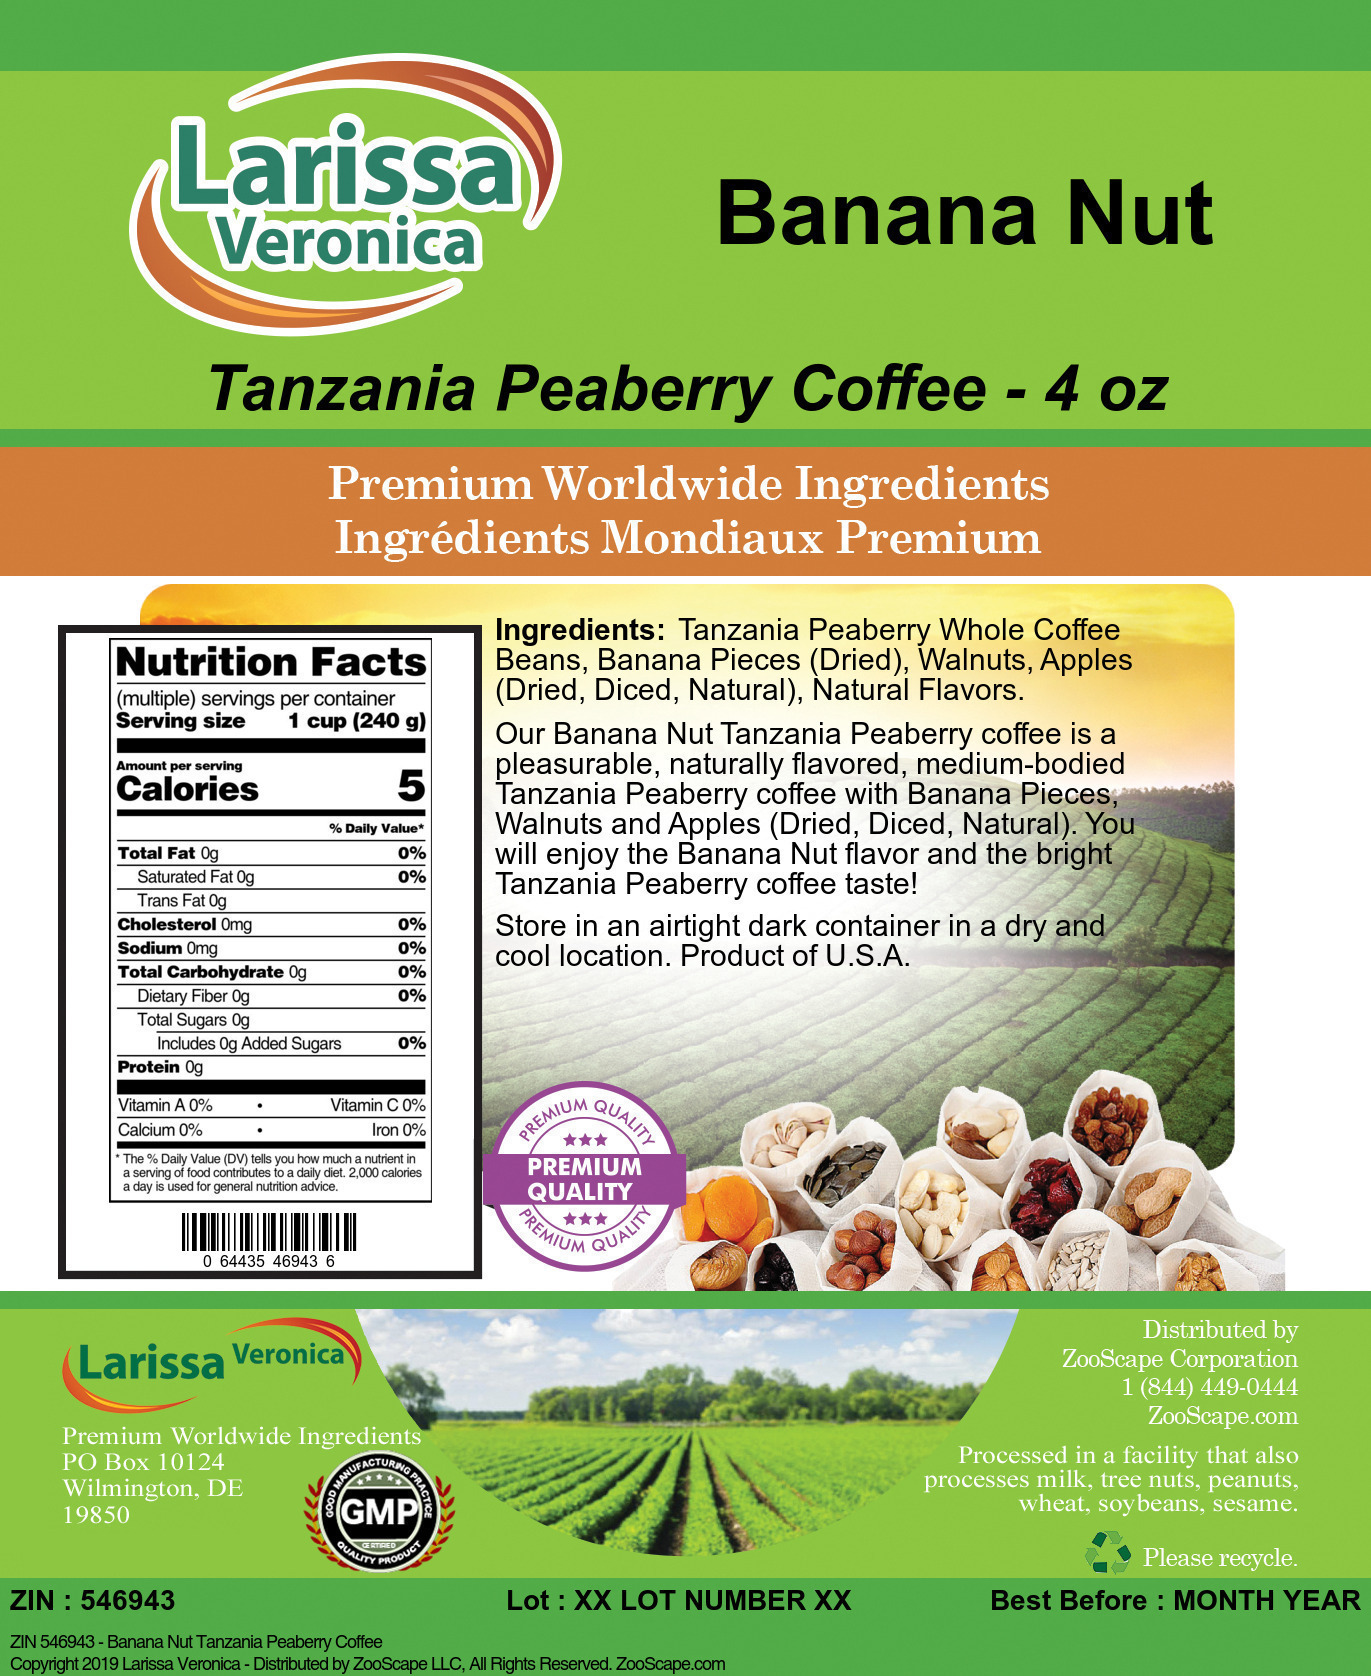 Banana Nut Tanzania Peaberry Coffee - Label